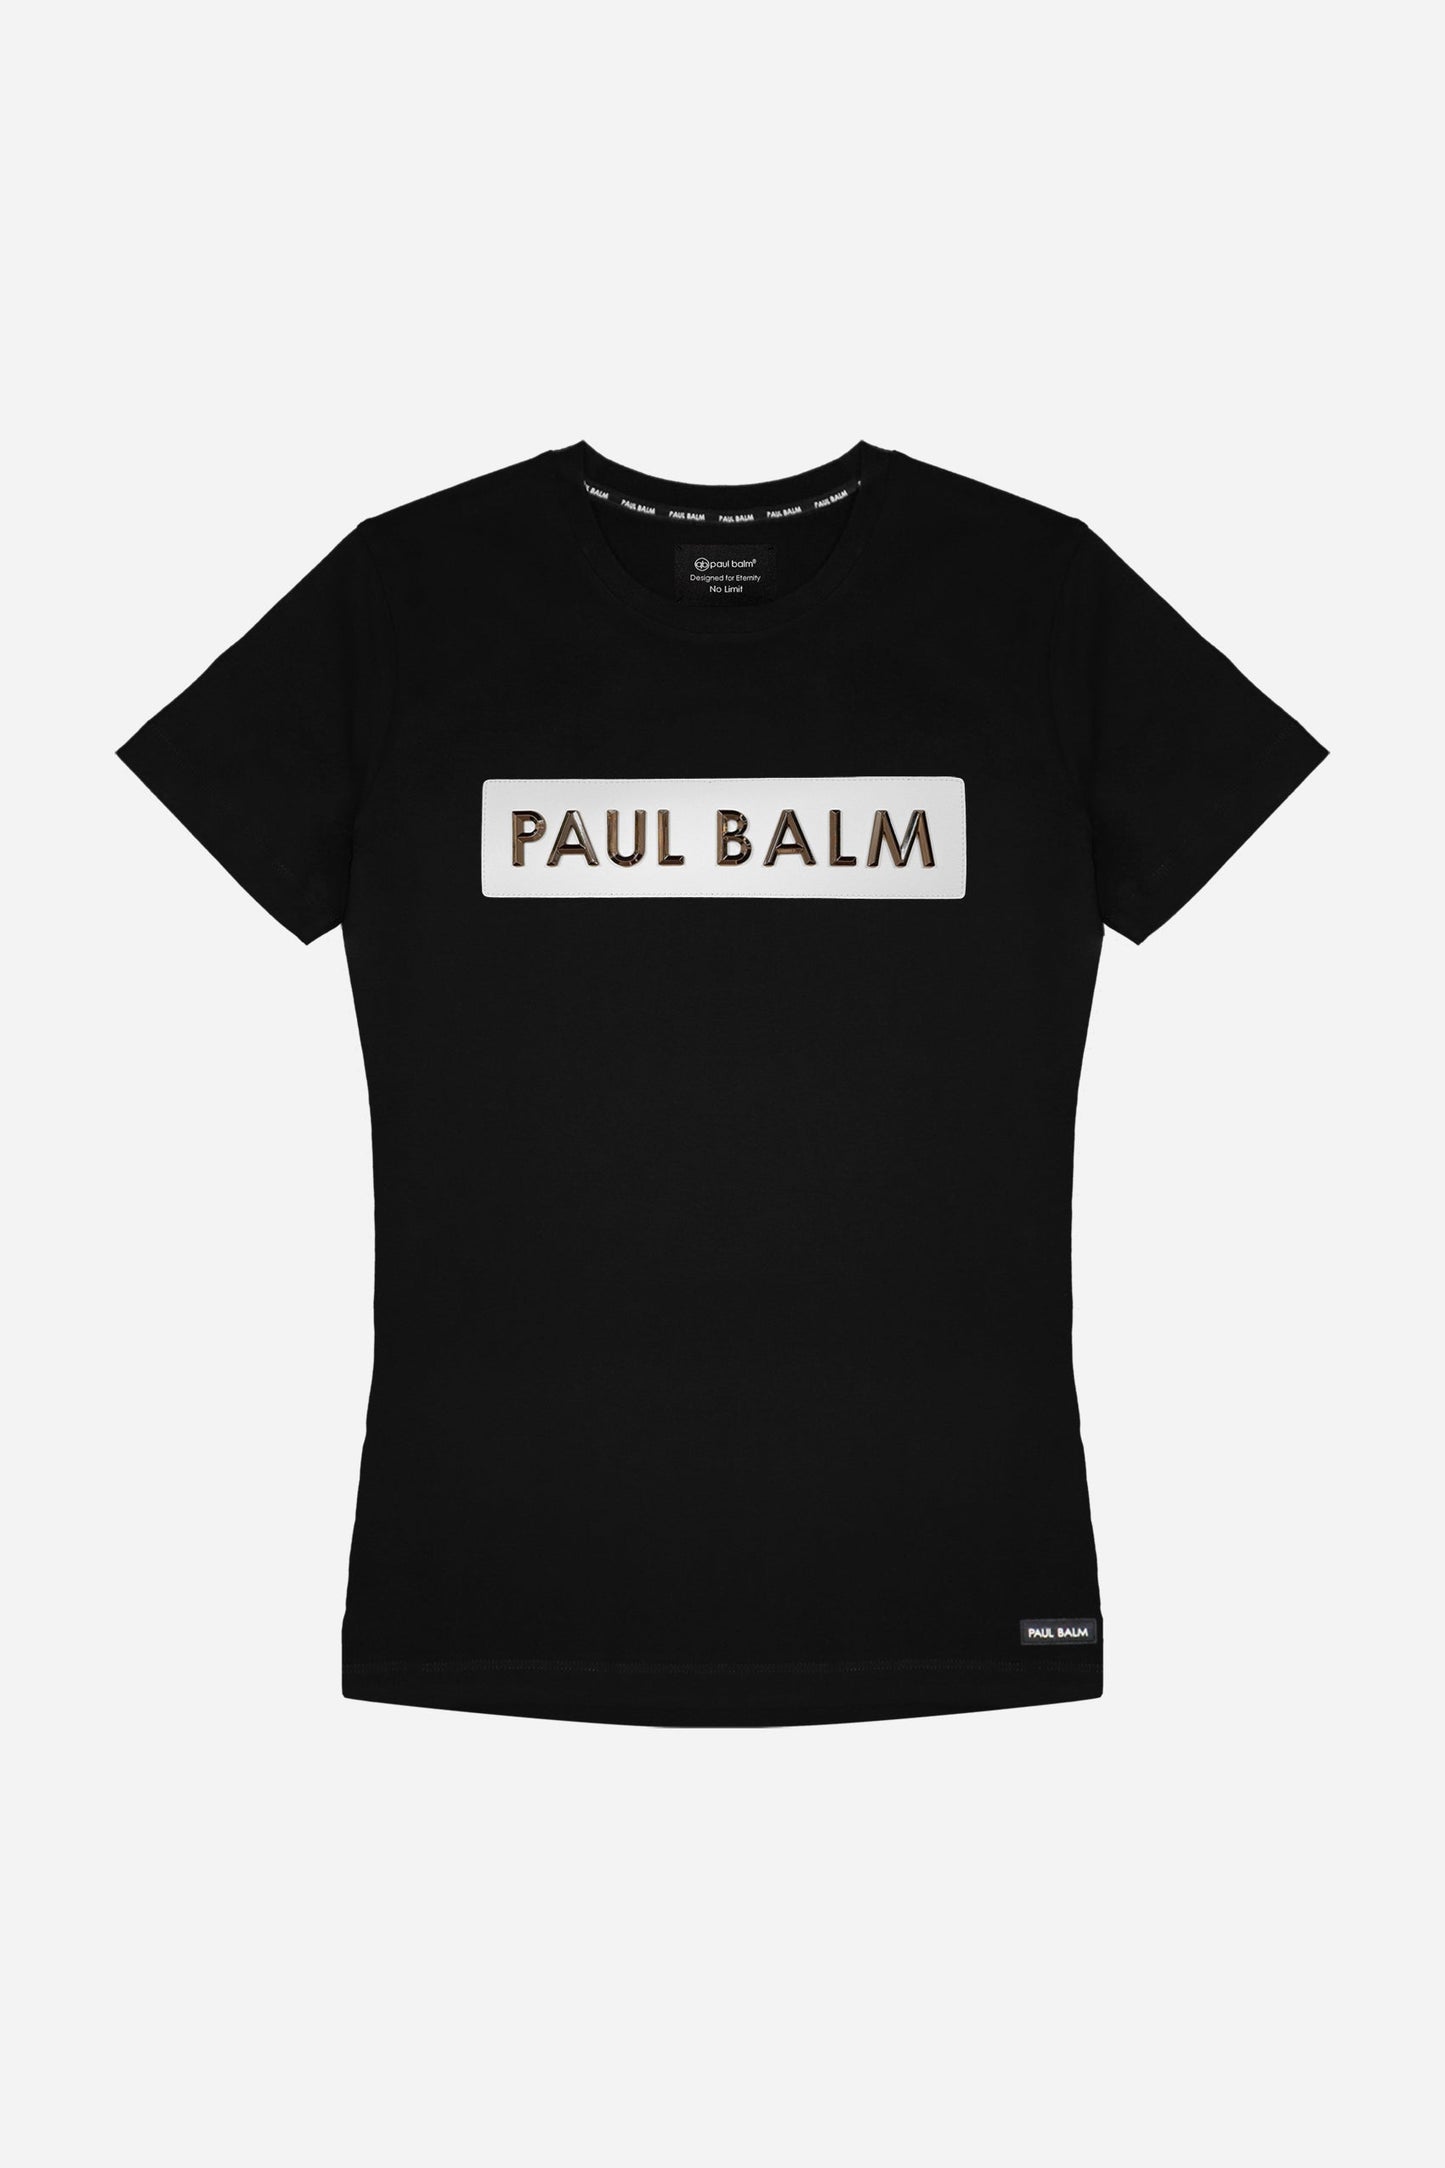 PAUL BALM Metal Patch gun metal/white Tshirt